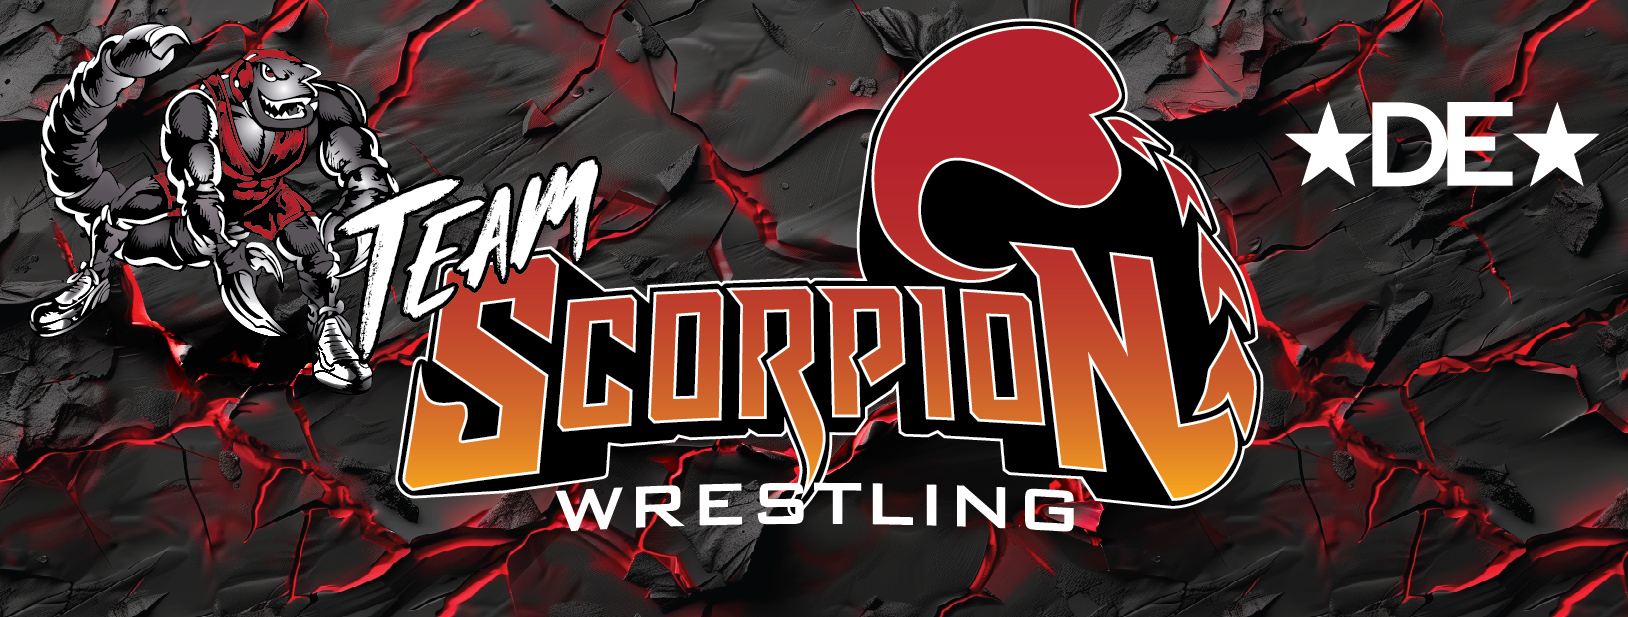 Team Scorpion Gear Store